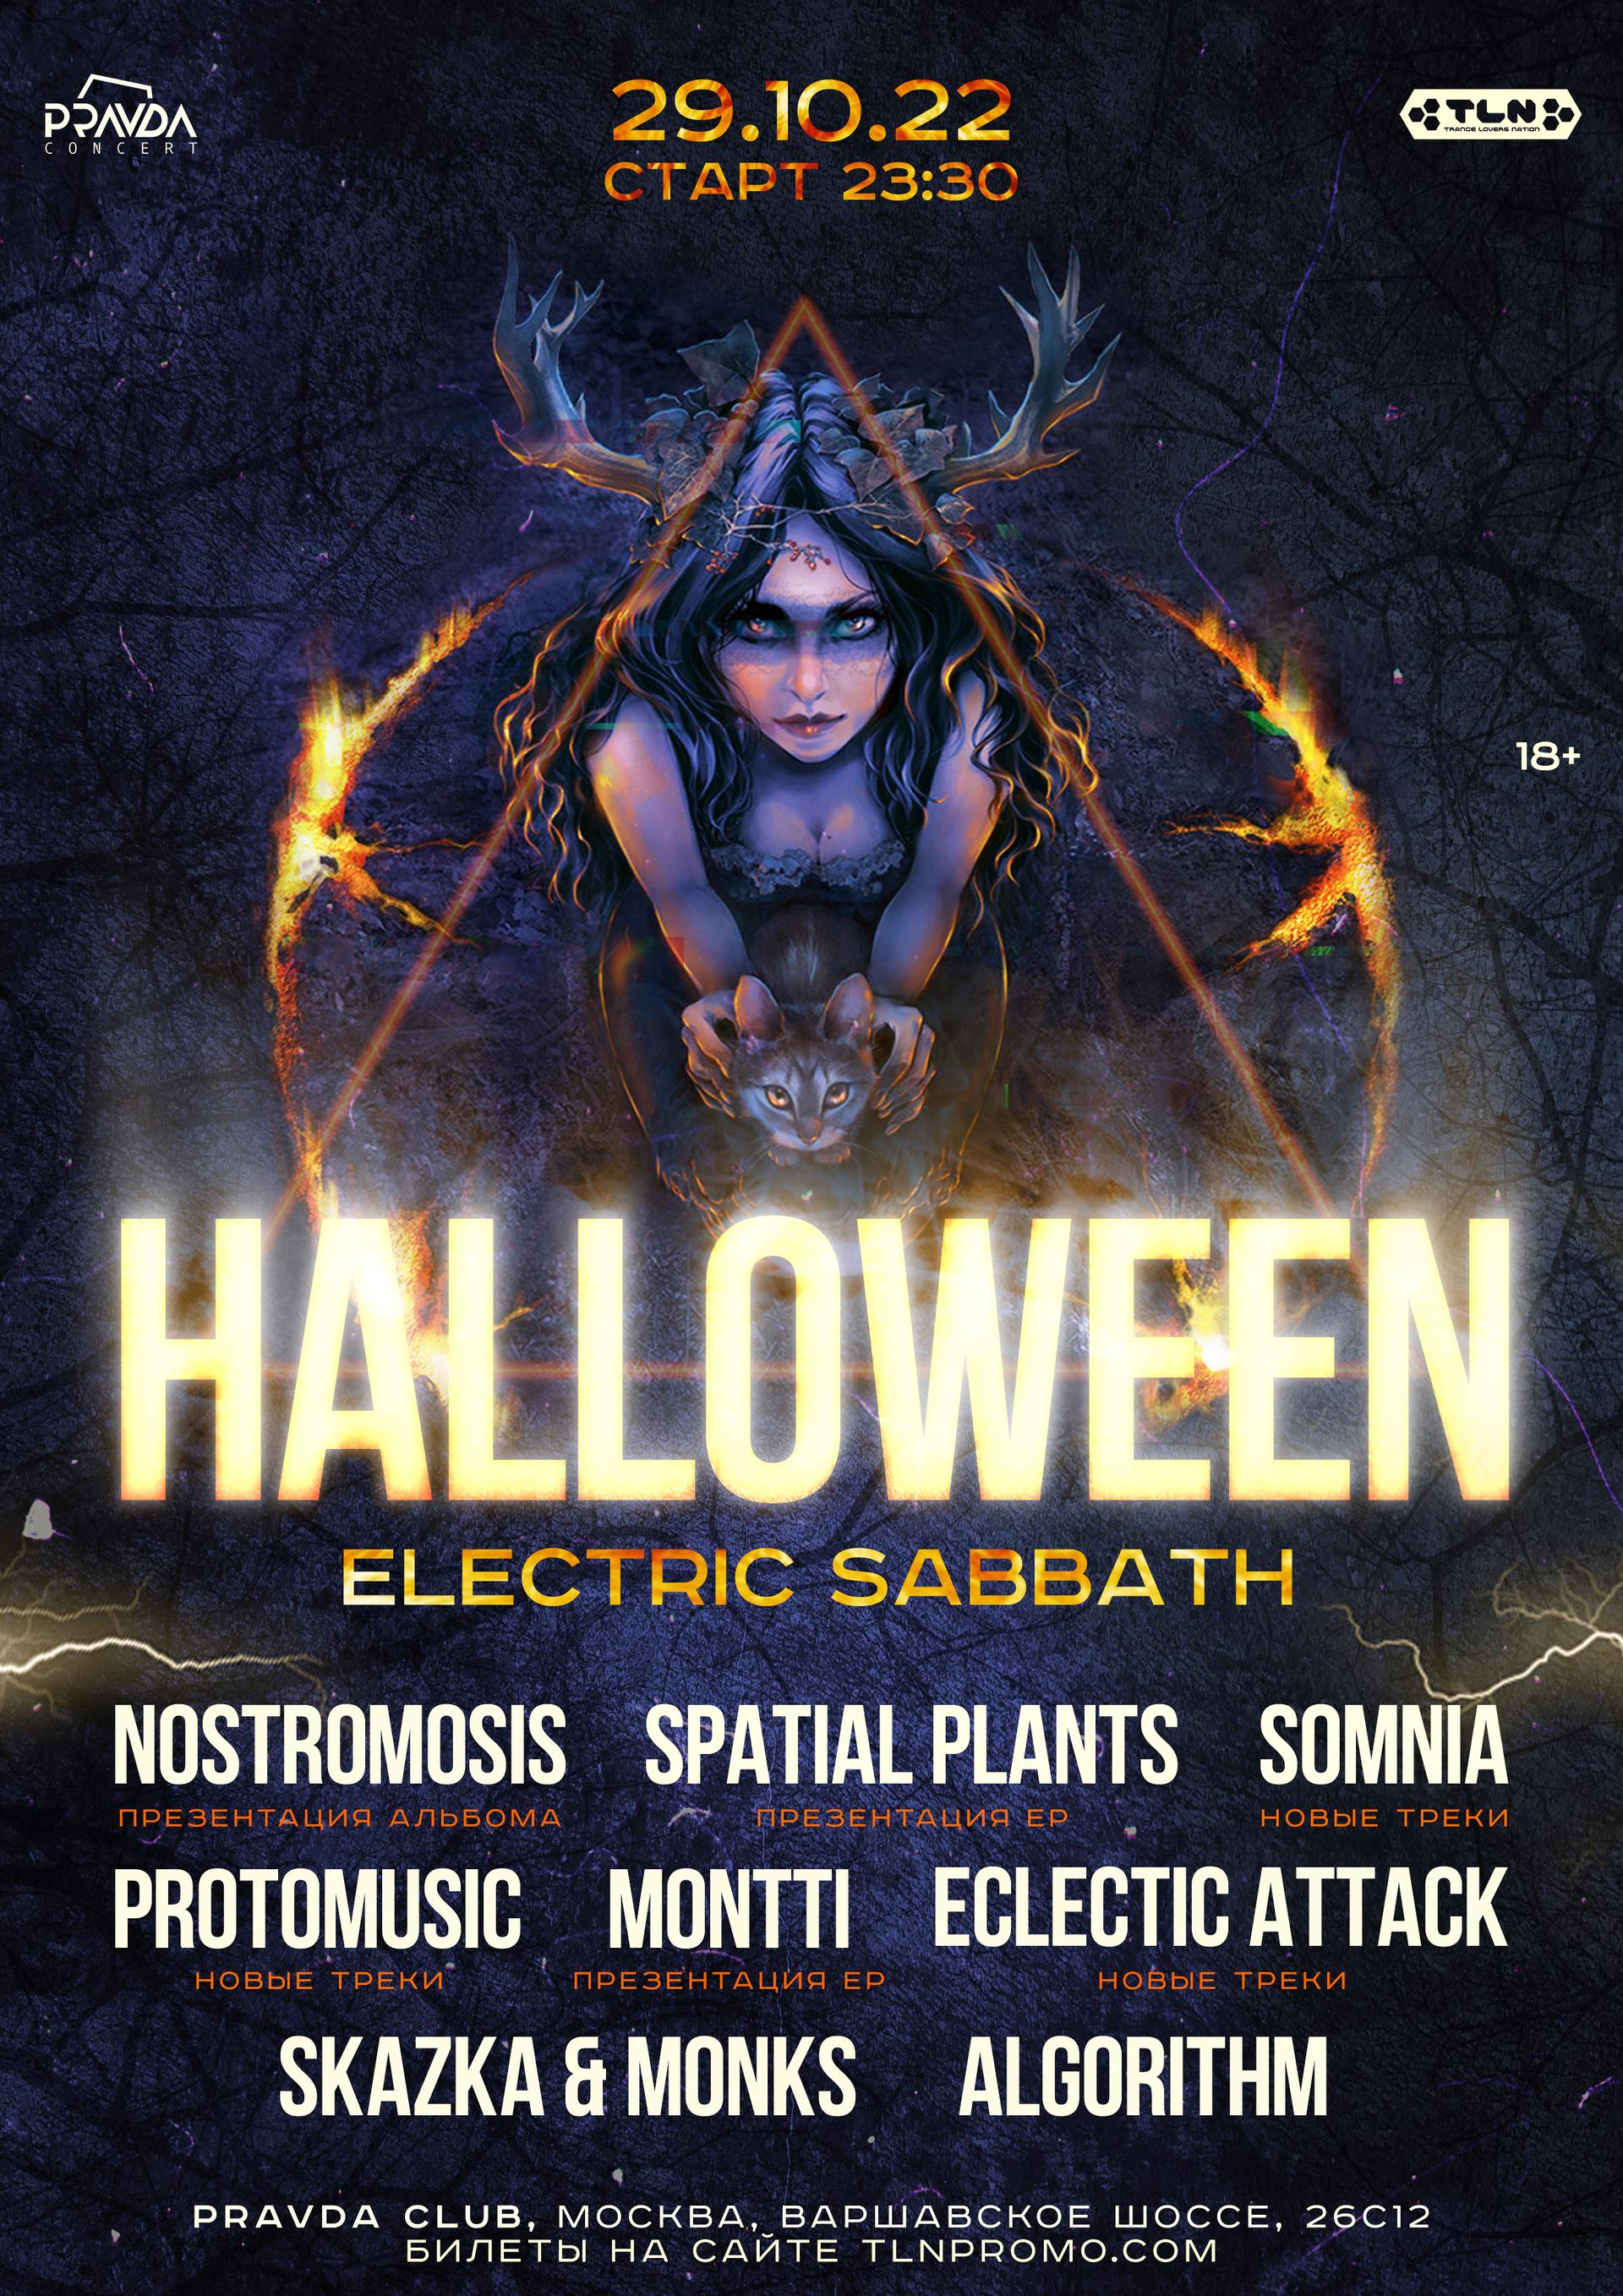 HALLOWEEN "Electric Sabbath"